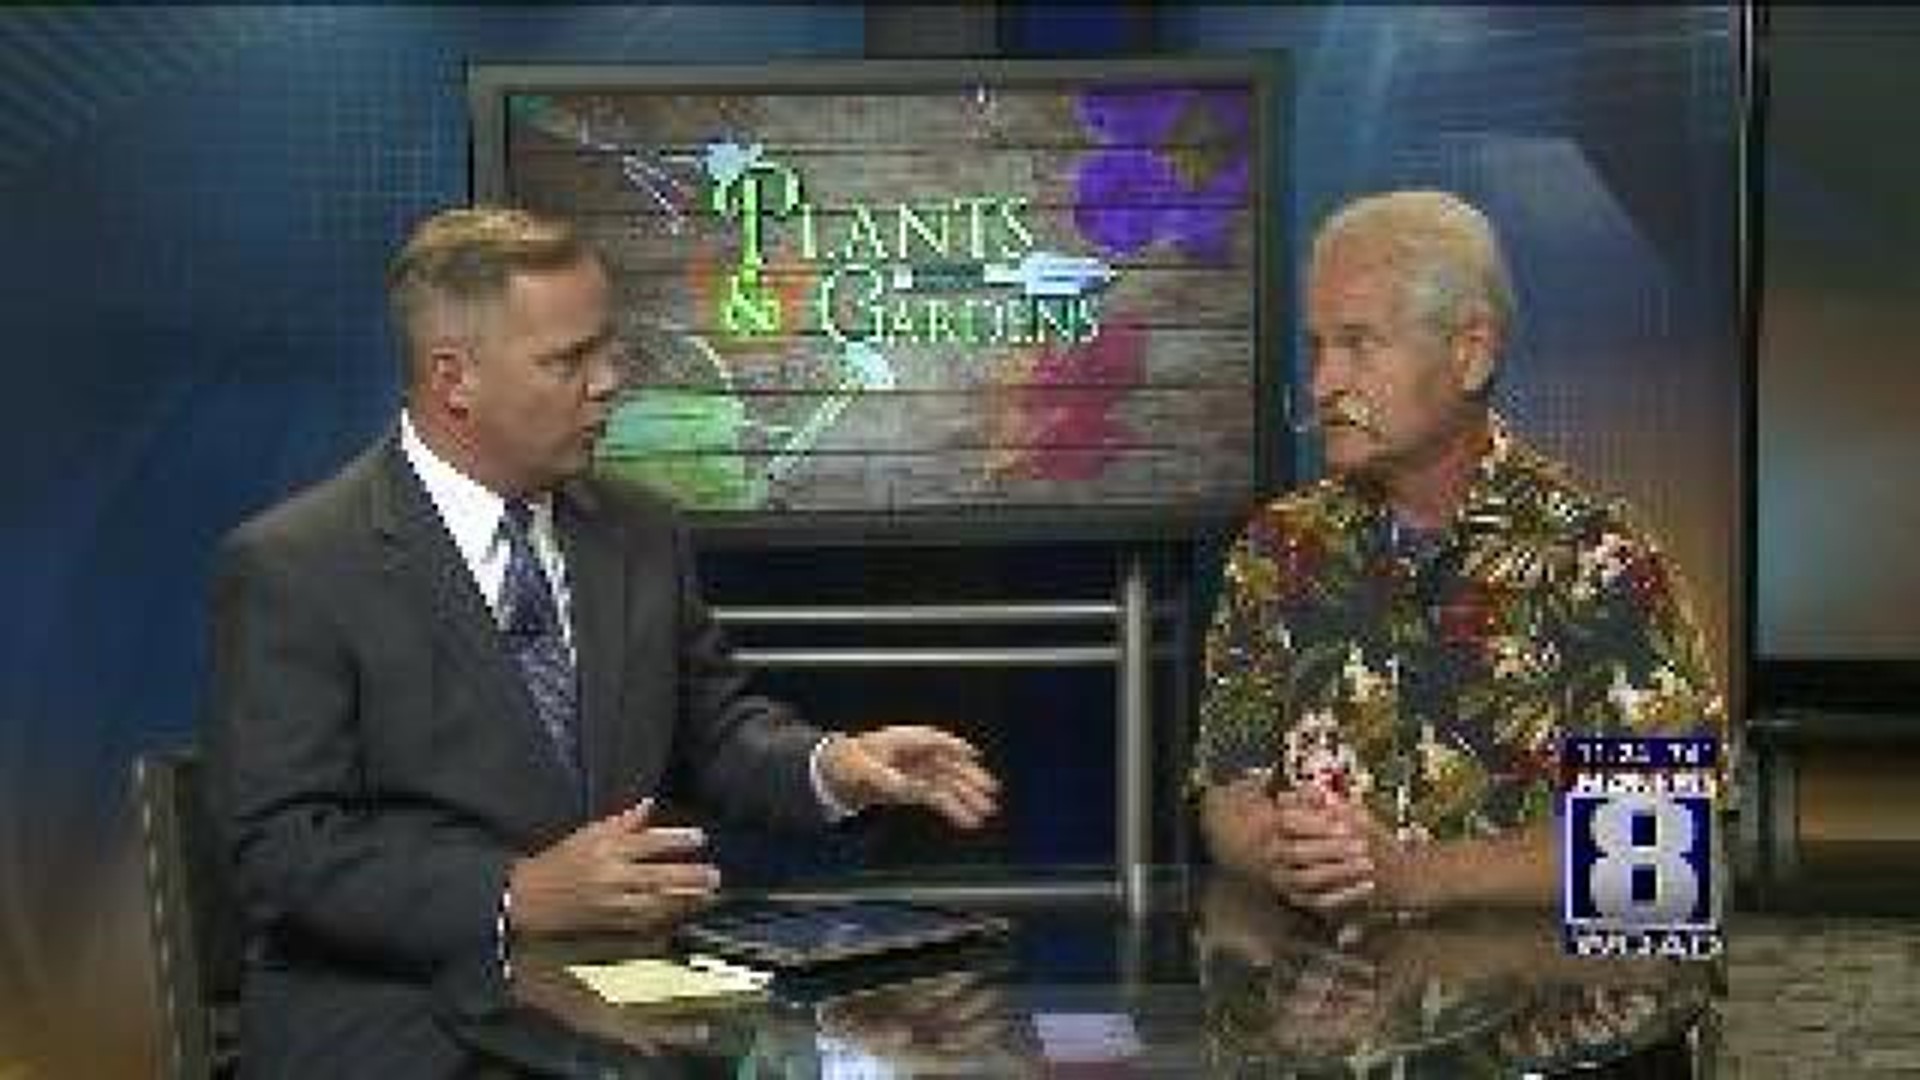 Plant and Garden Expert Craig Hignight